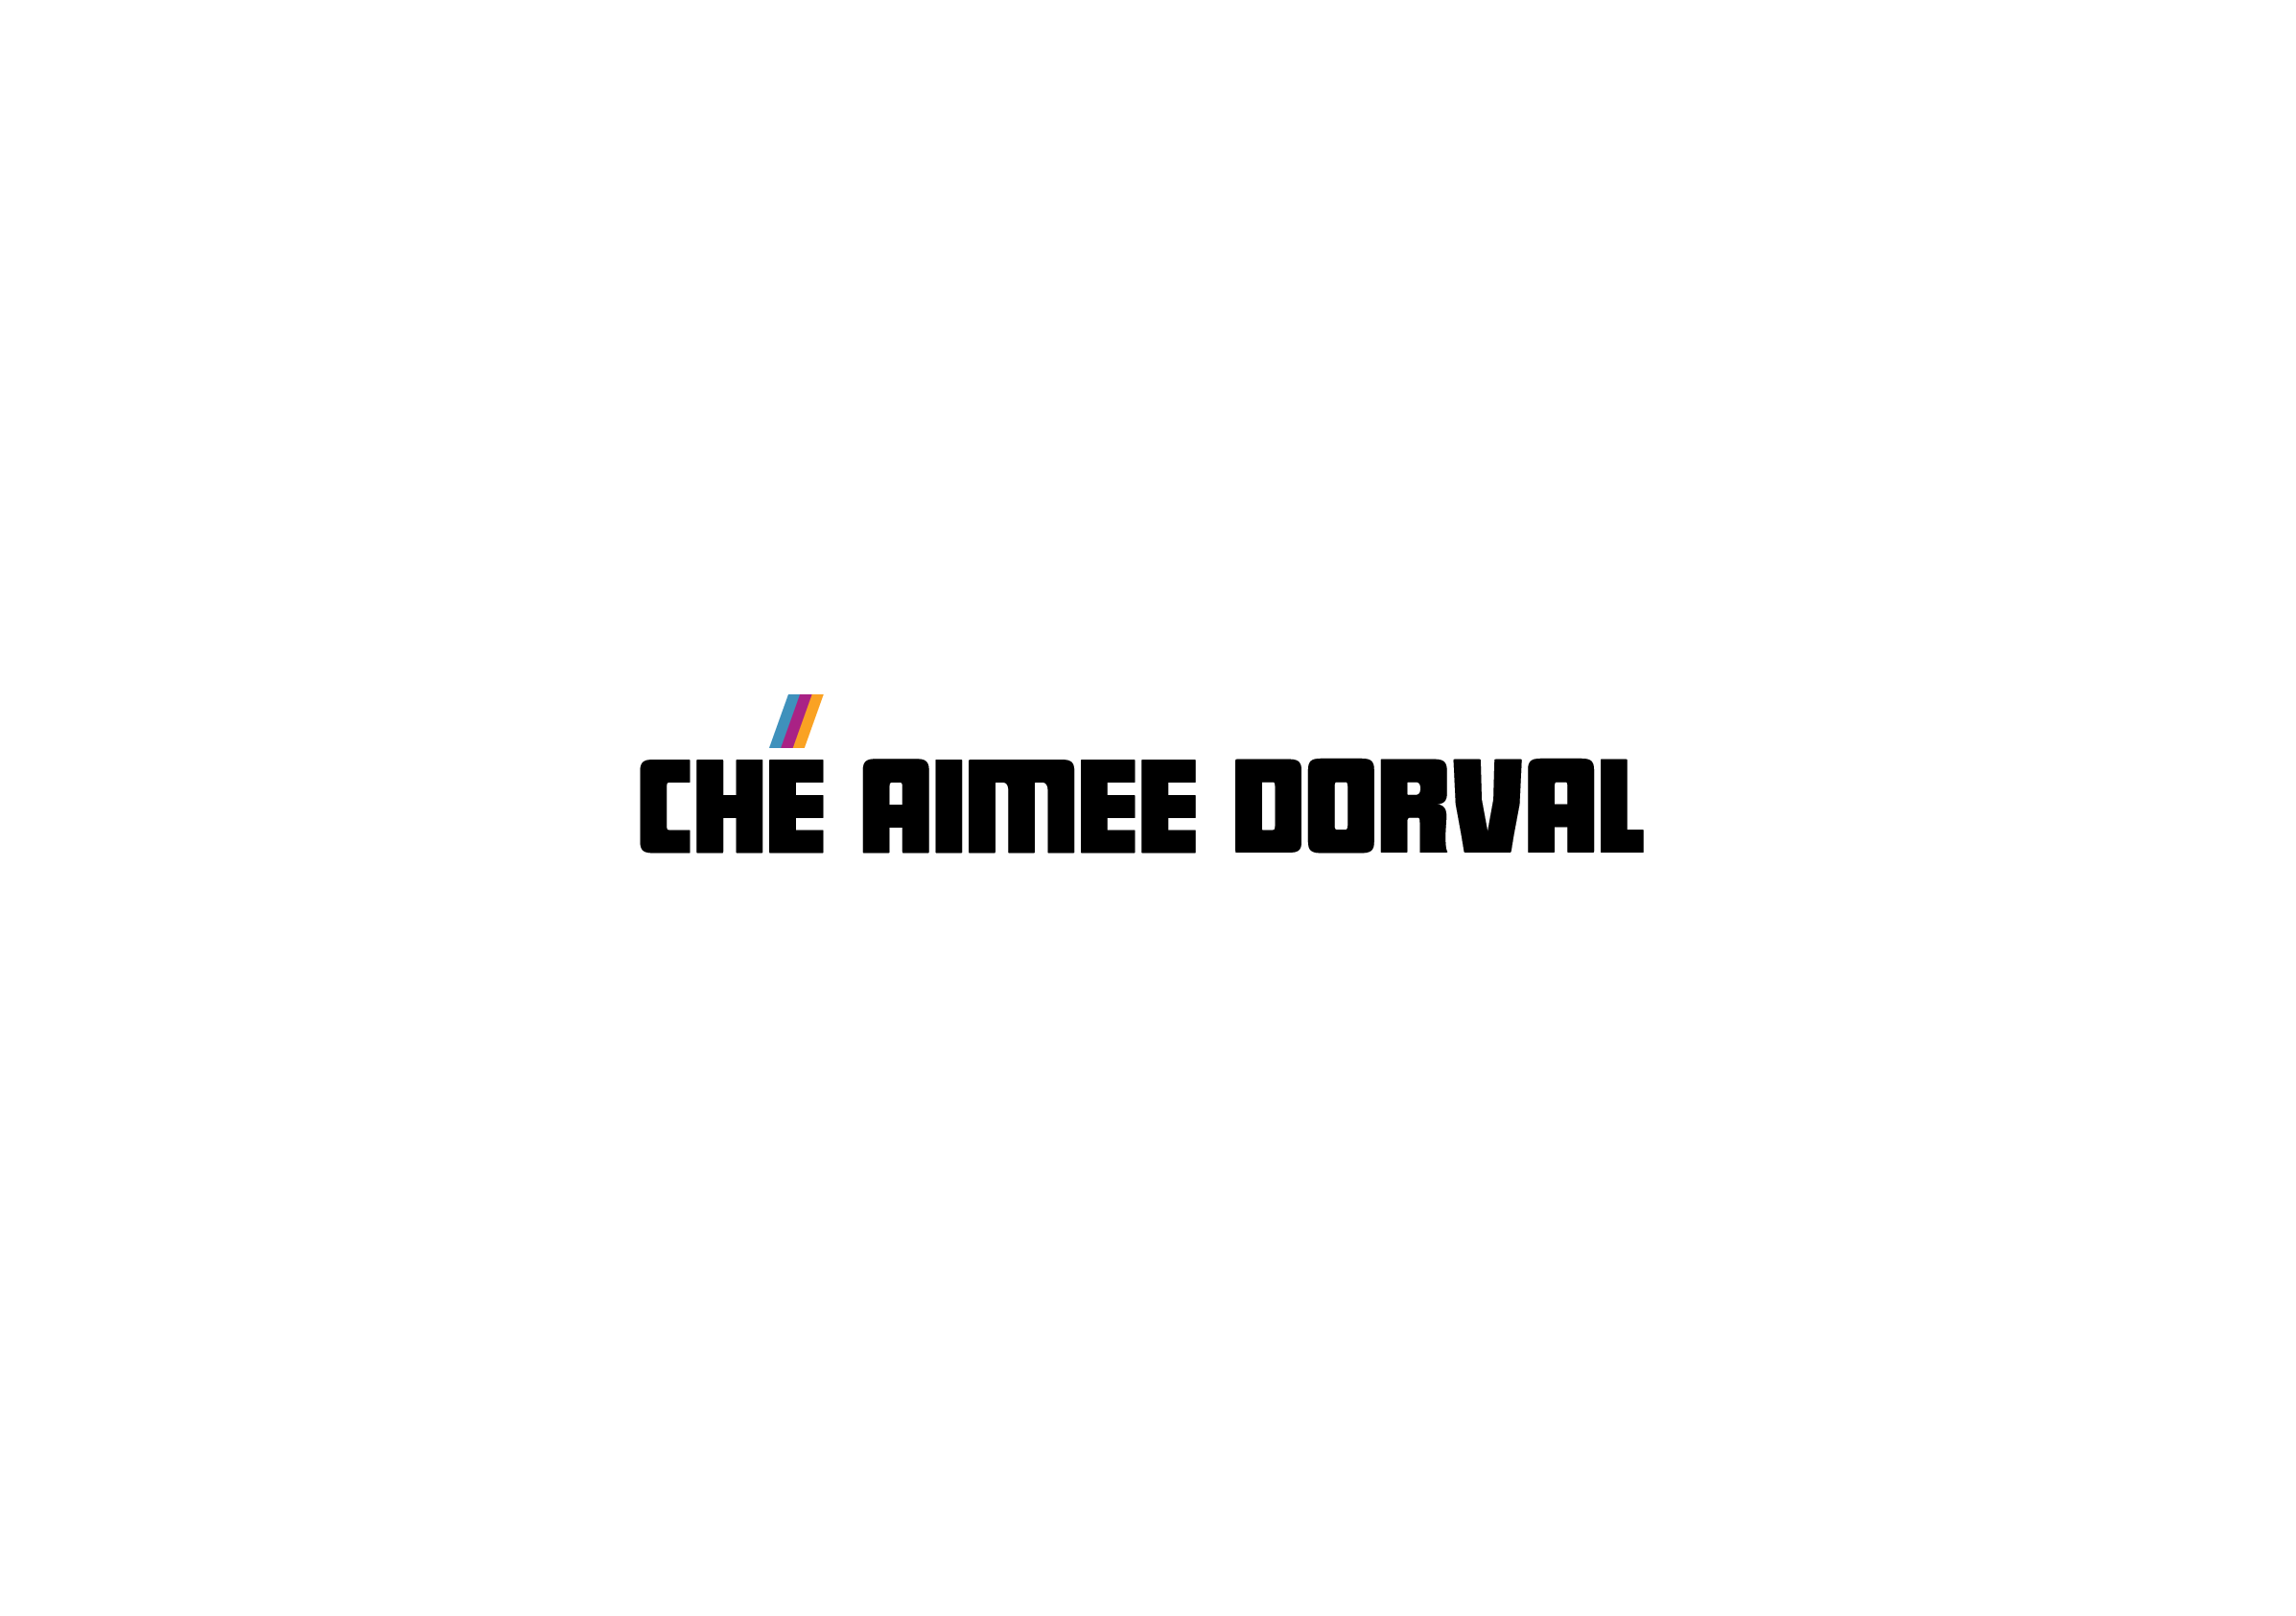 Logo wordmark horizontal version for Ché Aimee Dorval by Ottawa graphic designer idApostle